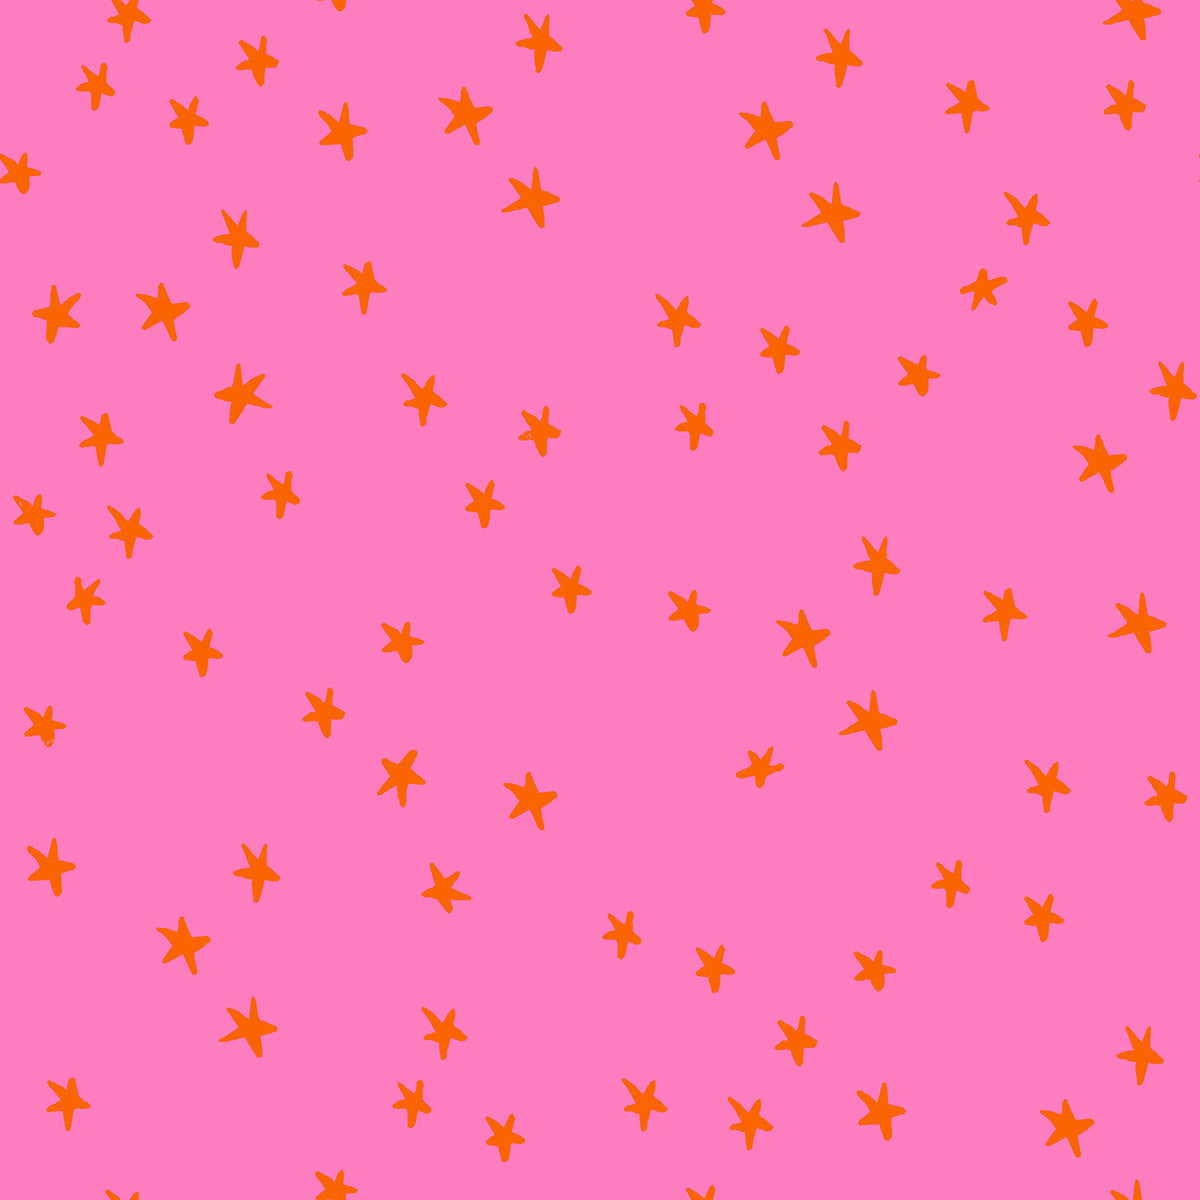 Starry Vivid Pink